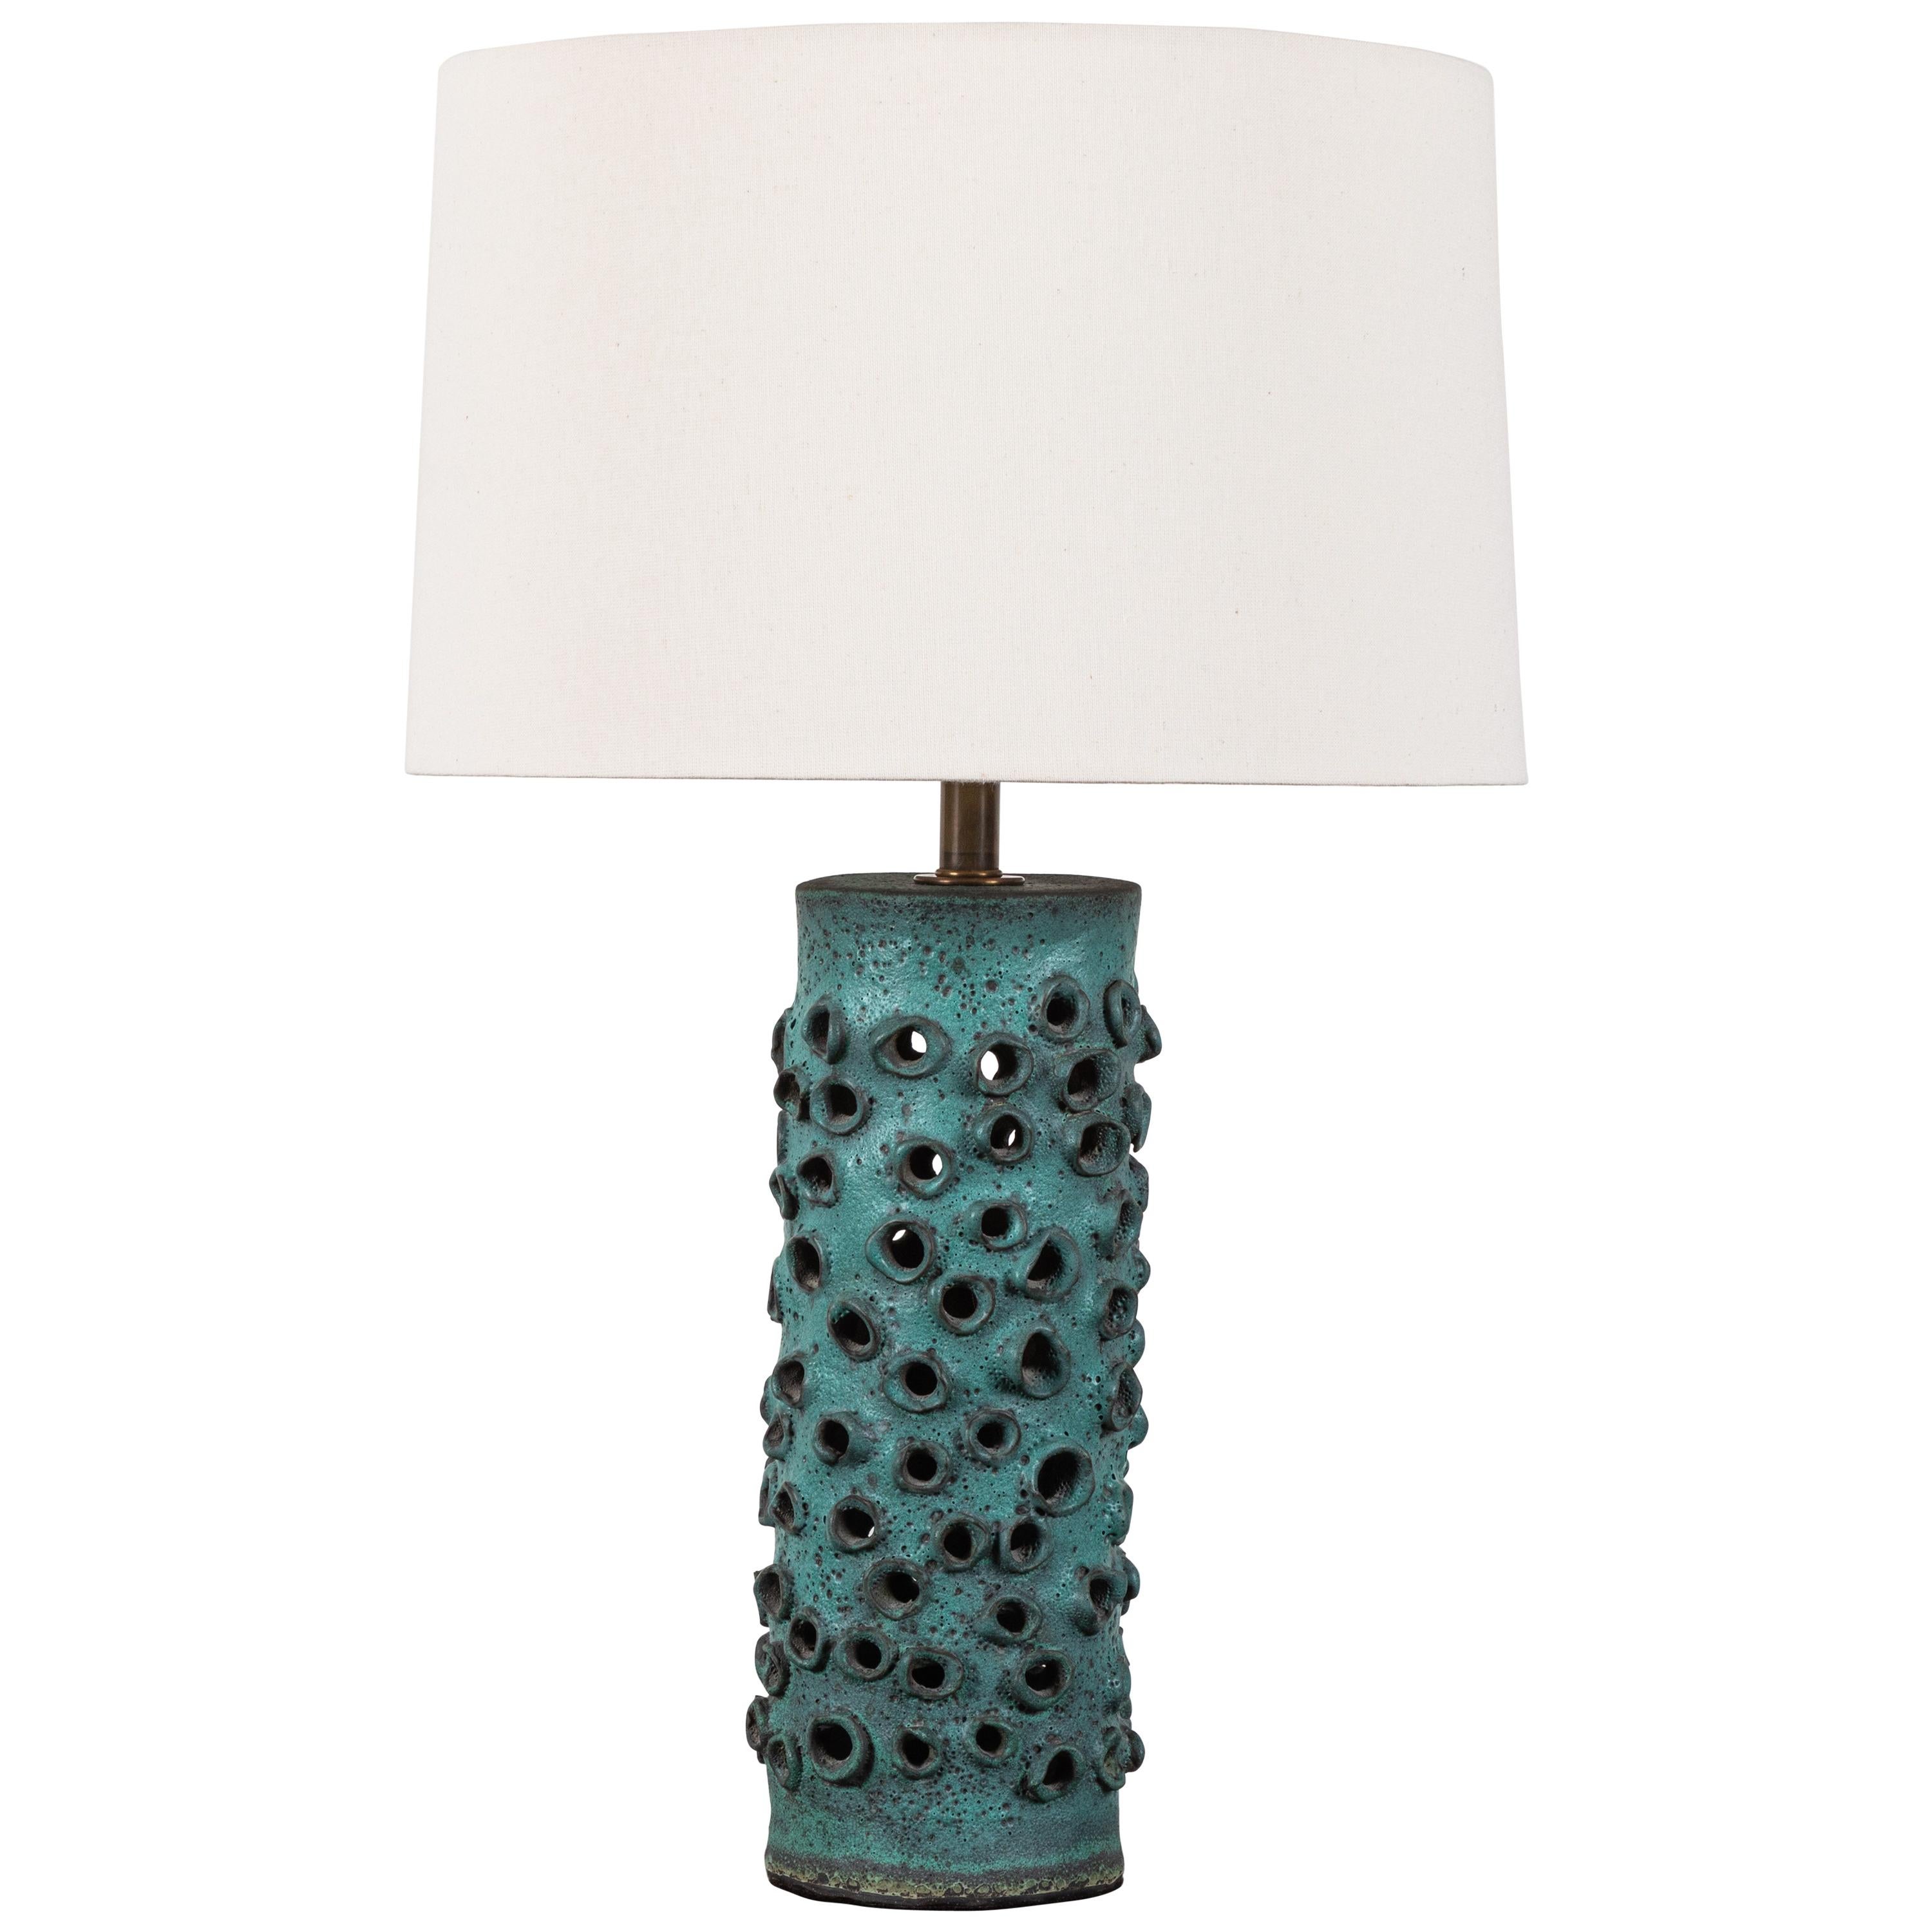 Trafitto Table Lamp by Magnolia Ceramics for Lawson-Fenning